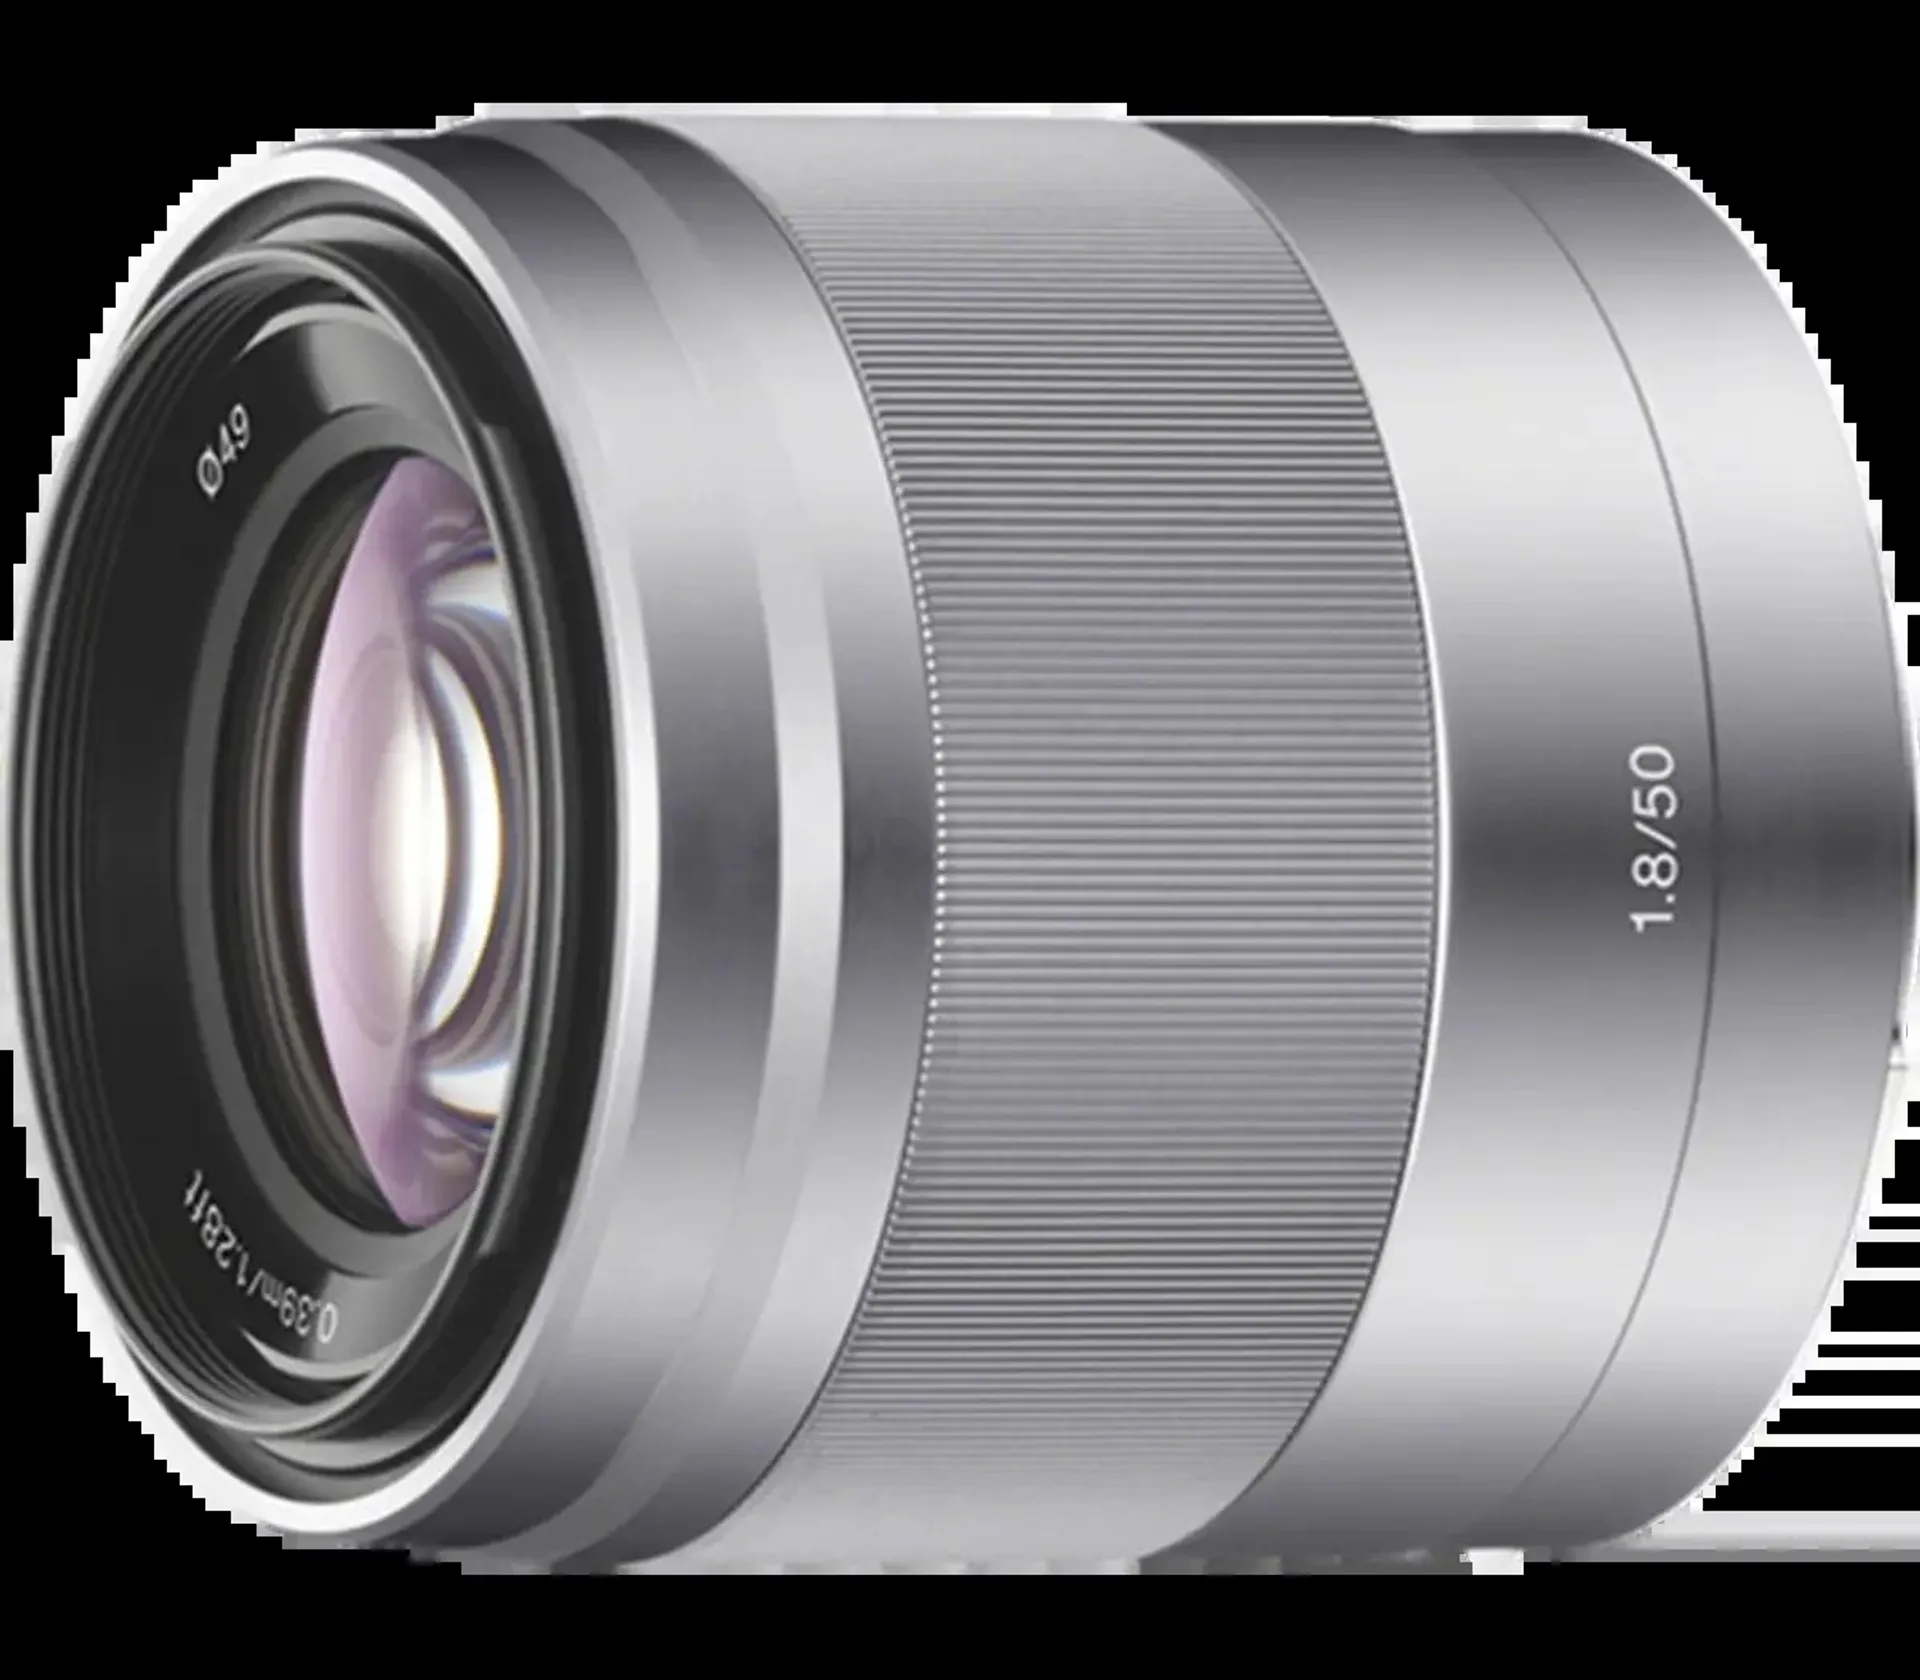 E 50 mm F1.8 OSS APS-C Standard Prime Lens with Optical SteadyShot